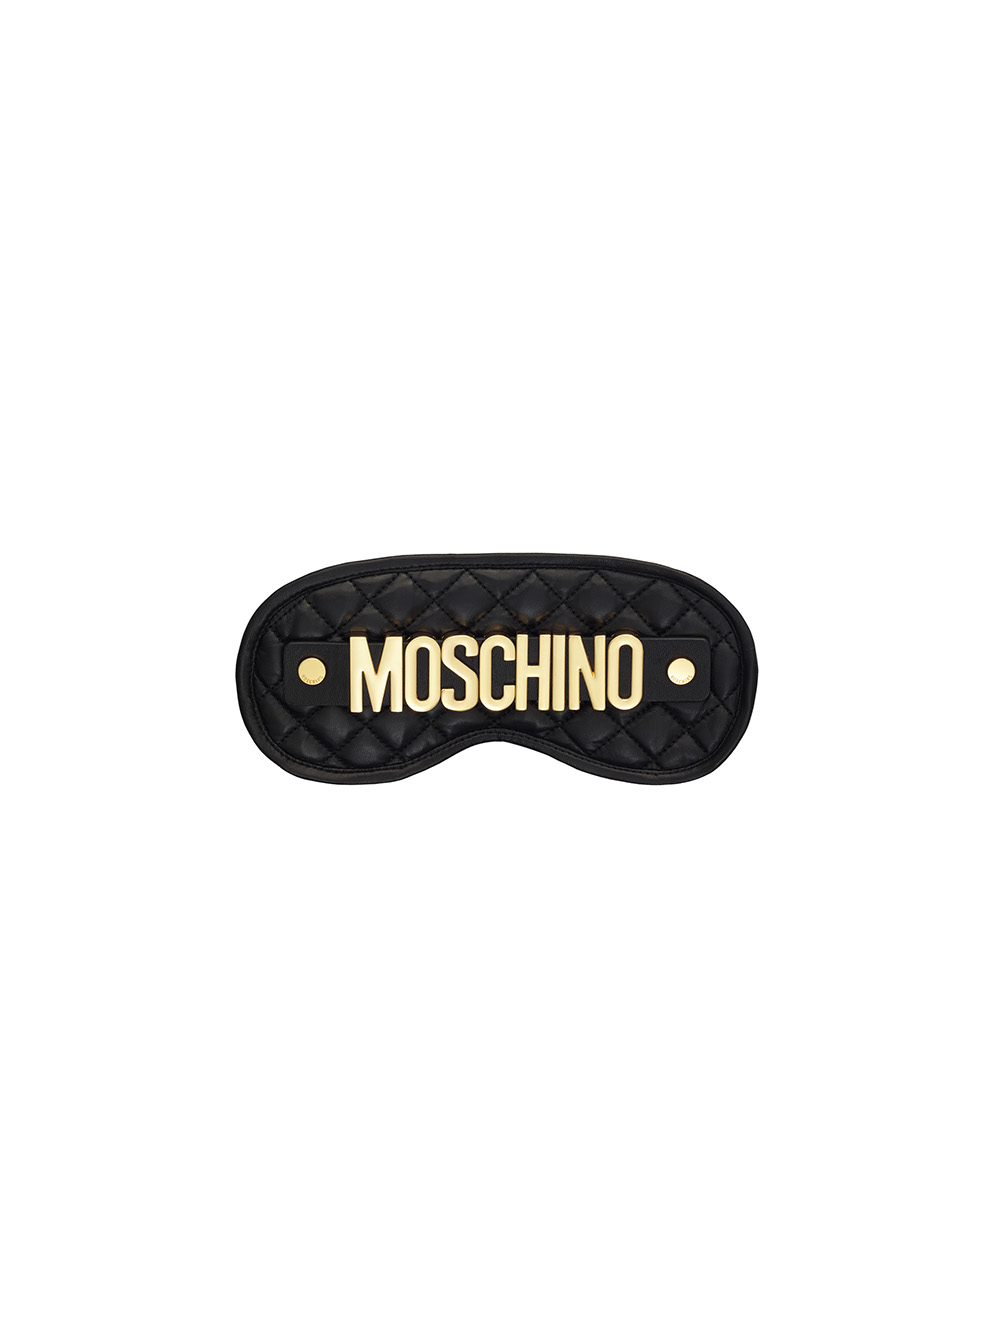 MOSCHINO [TV] H&M Sleeping Mask $69.99